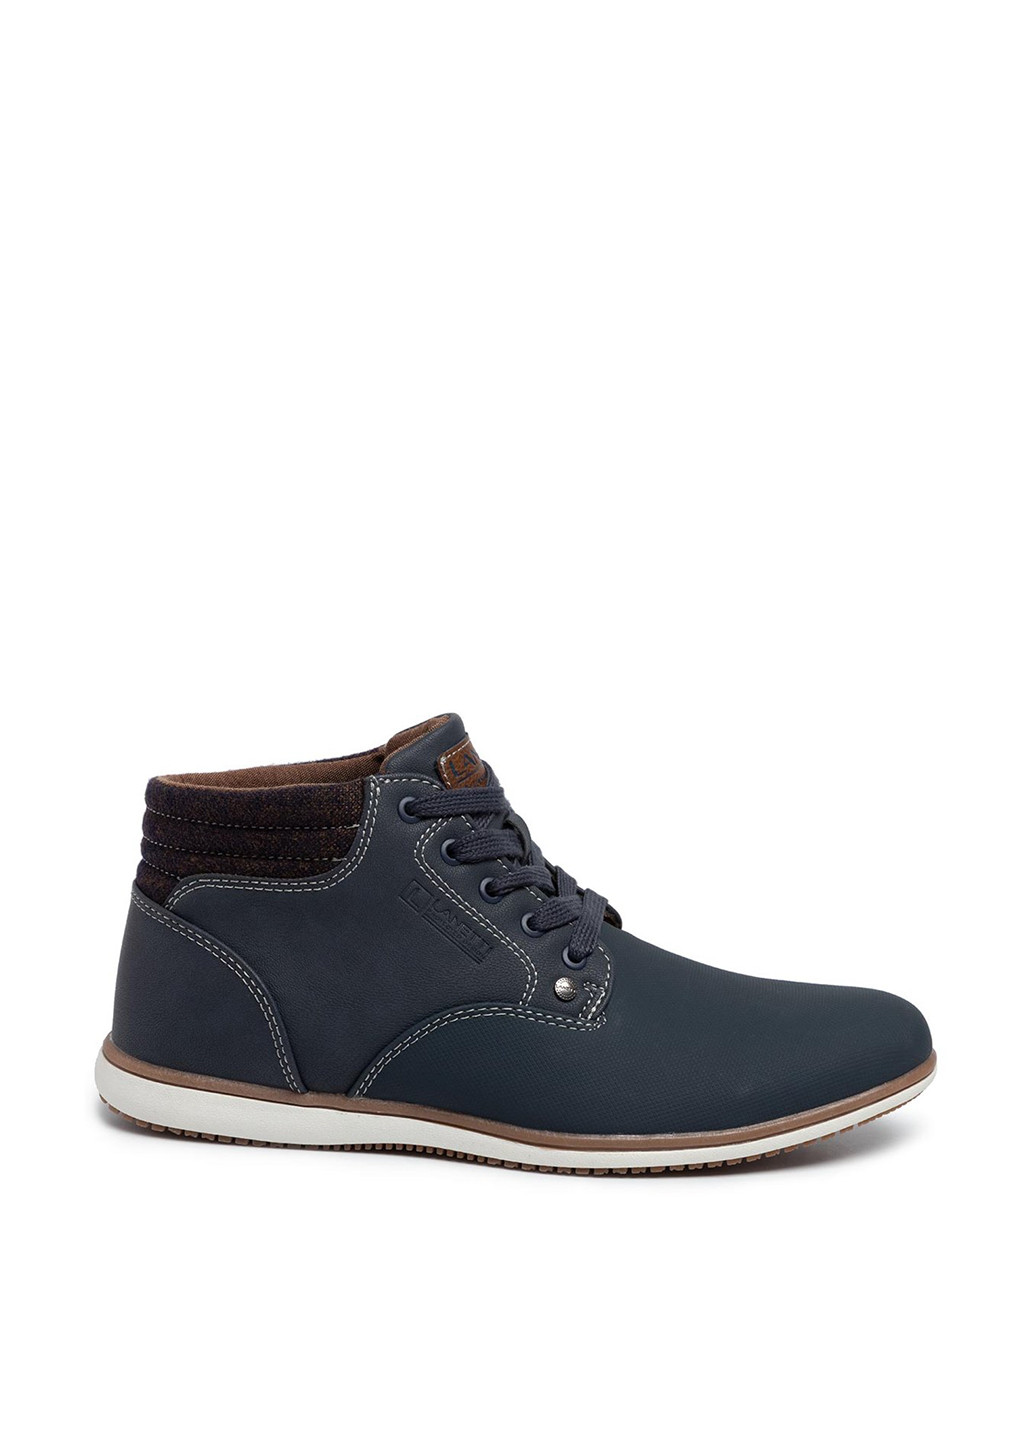 Темно-синие зимние черевики mp07-17047-08 Lanetti